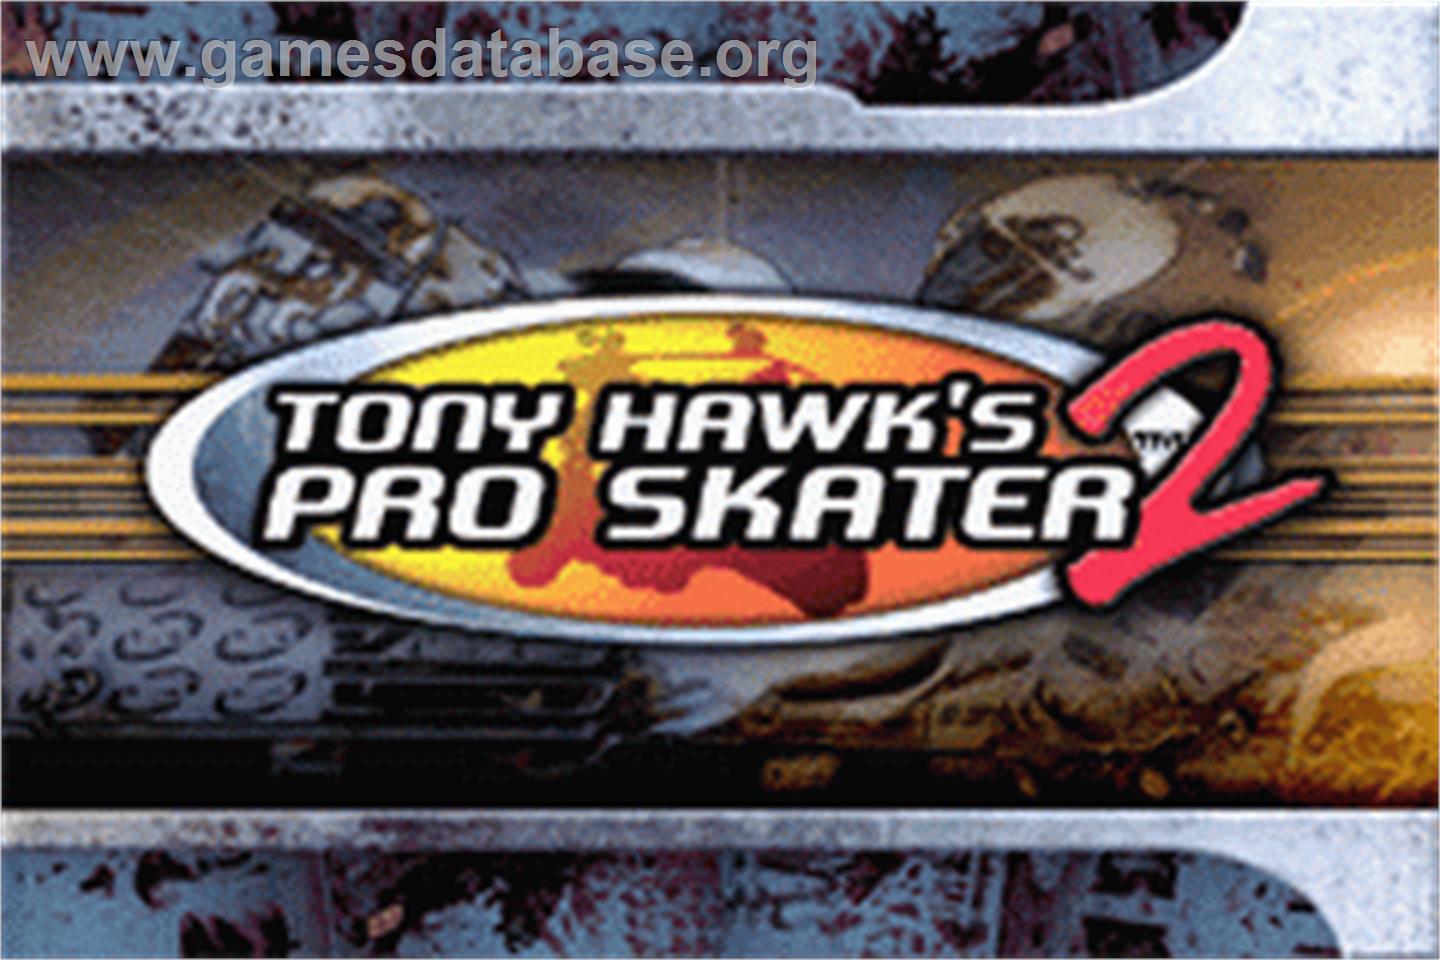 Tony Hawk's Pro Skater 2 - Nintendo Game Boy Advance - Artwork - Title Screen